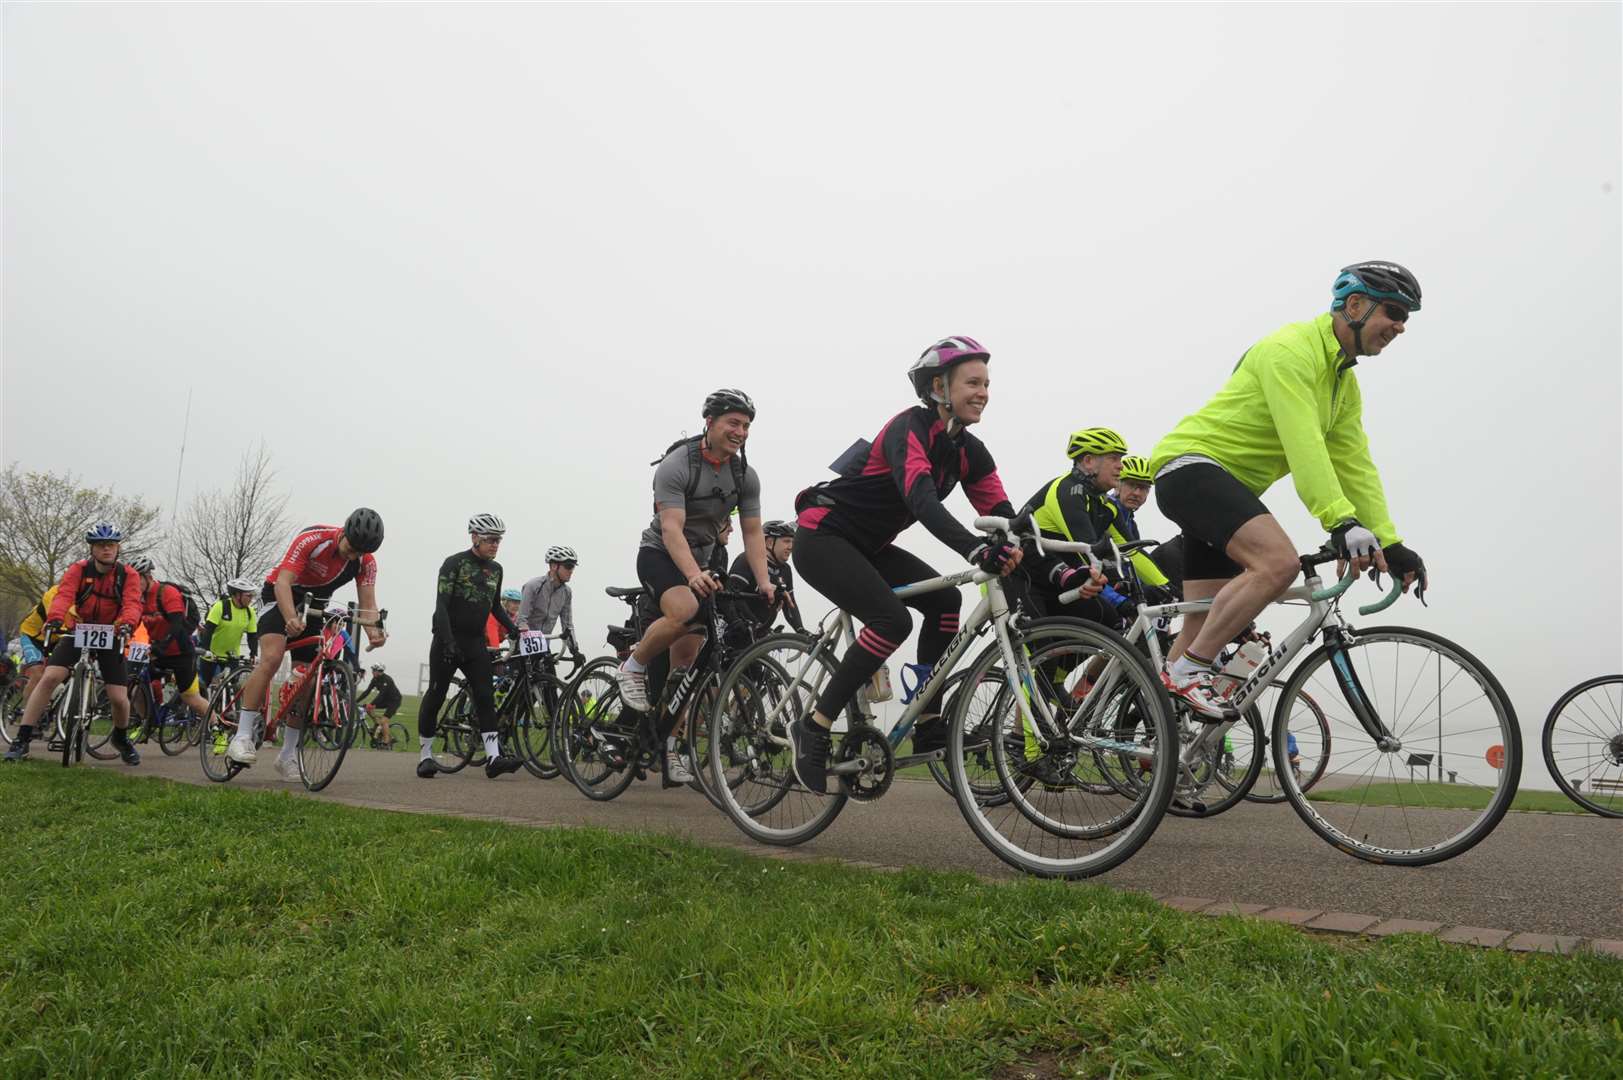 On Your Bike 2018, at Gravesend Promenade, Gravesend Rotary club charity bike ride. Picture: Steve Crispe